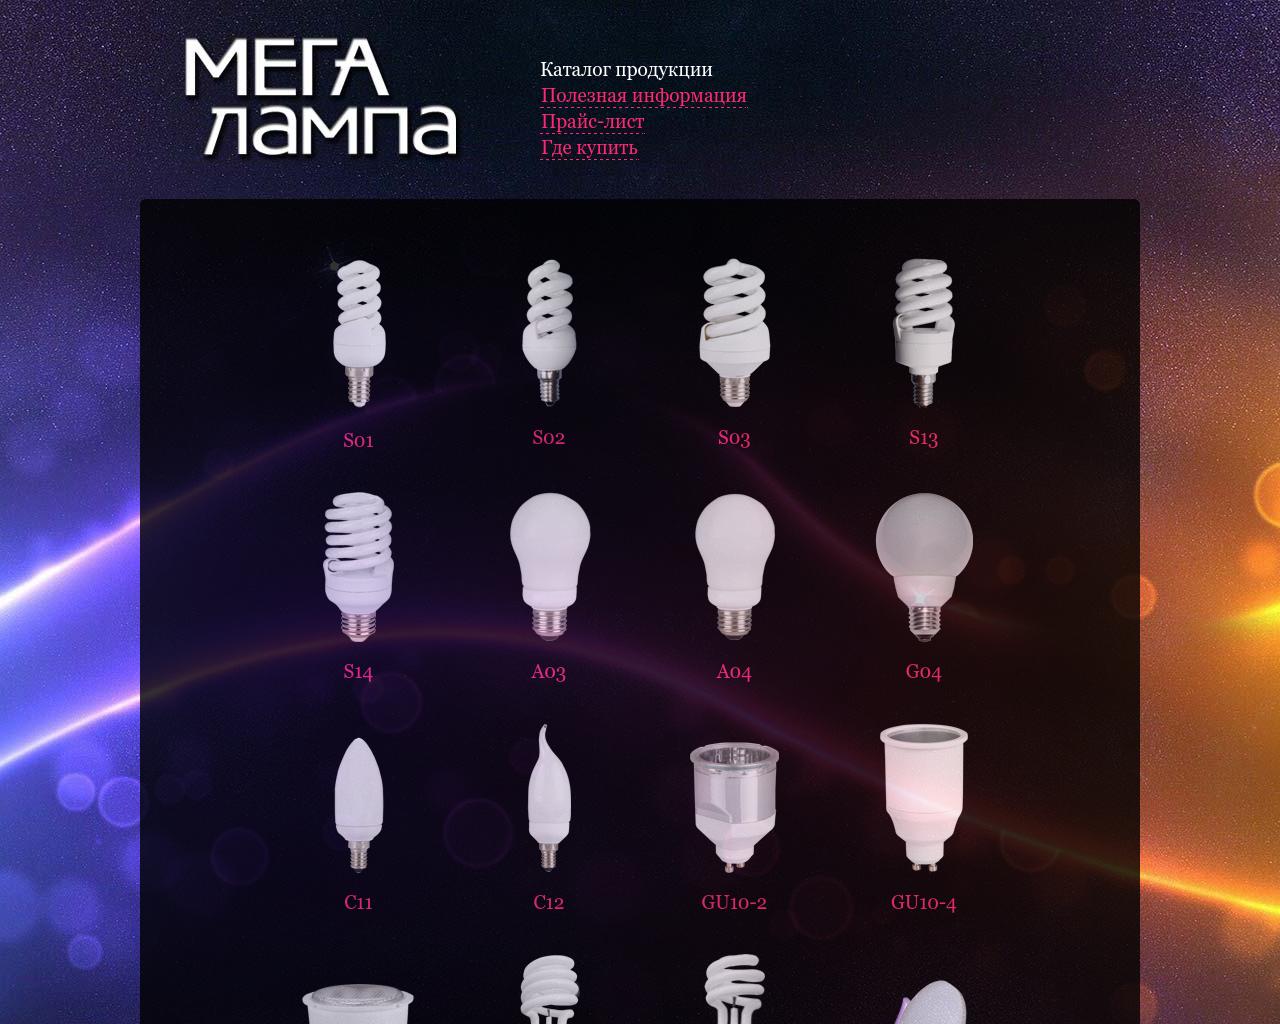 Изображение сайта mega-lampa.ru в разрешении 1280x1024